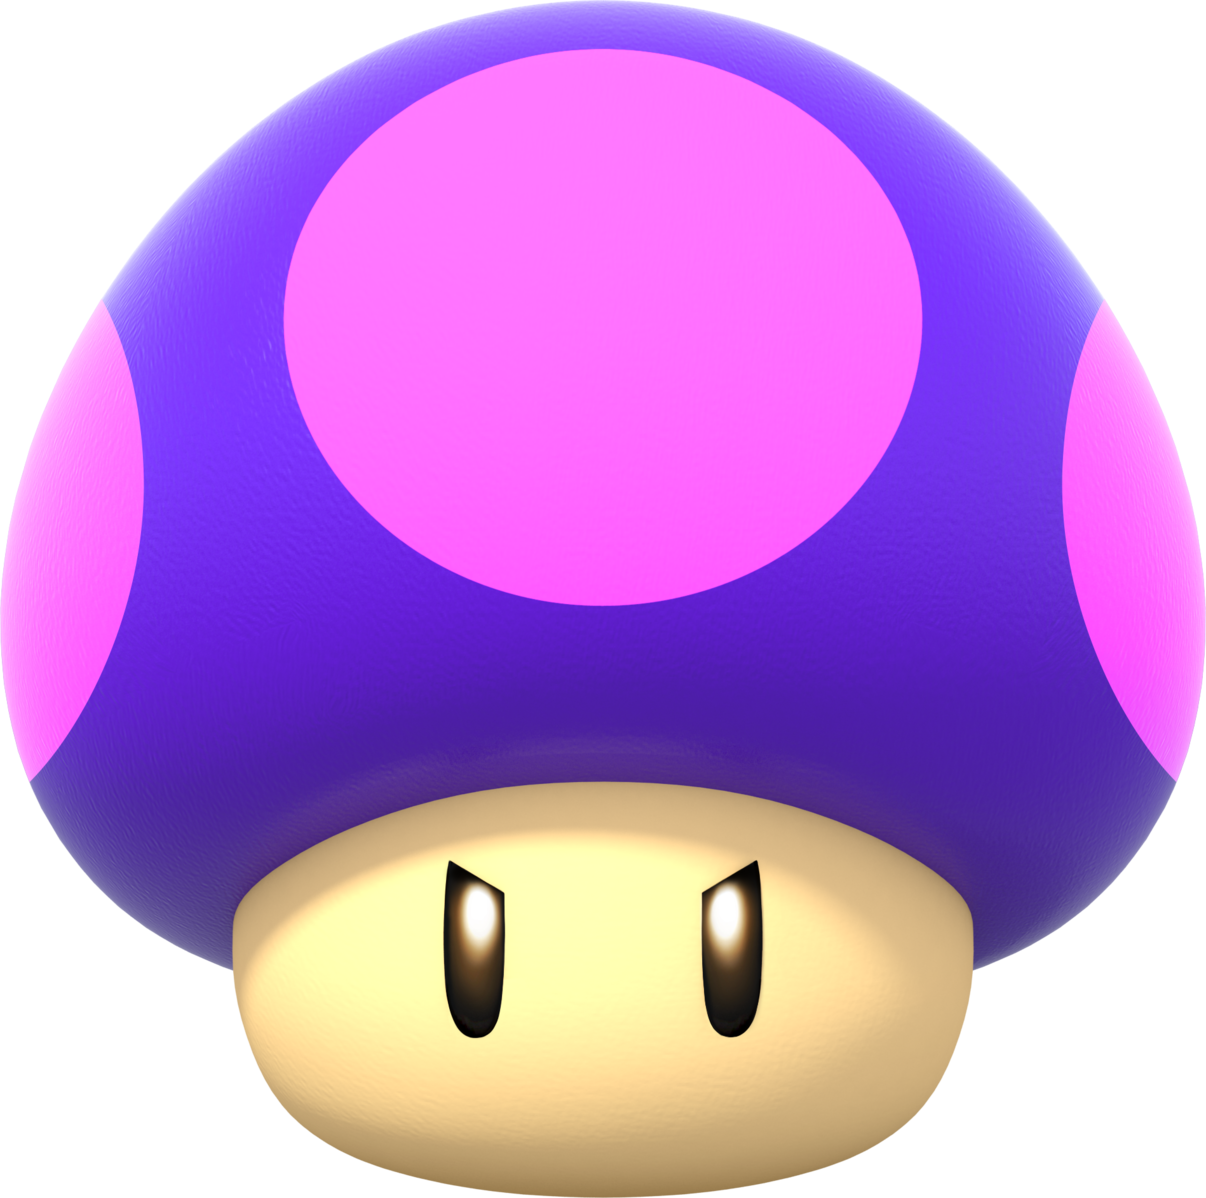 A Cartoon Mushroom With Pink Dots